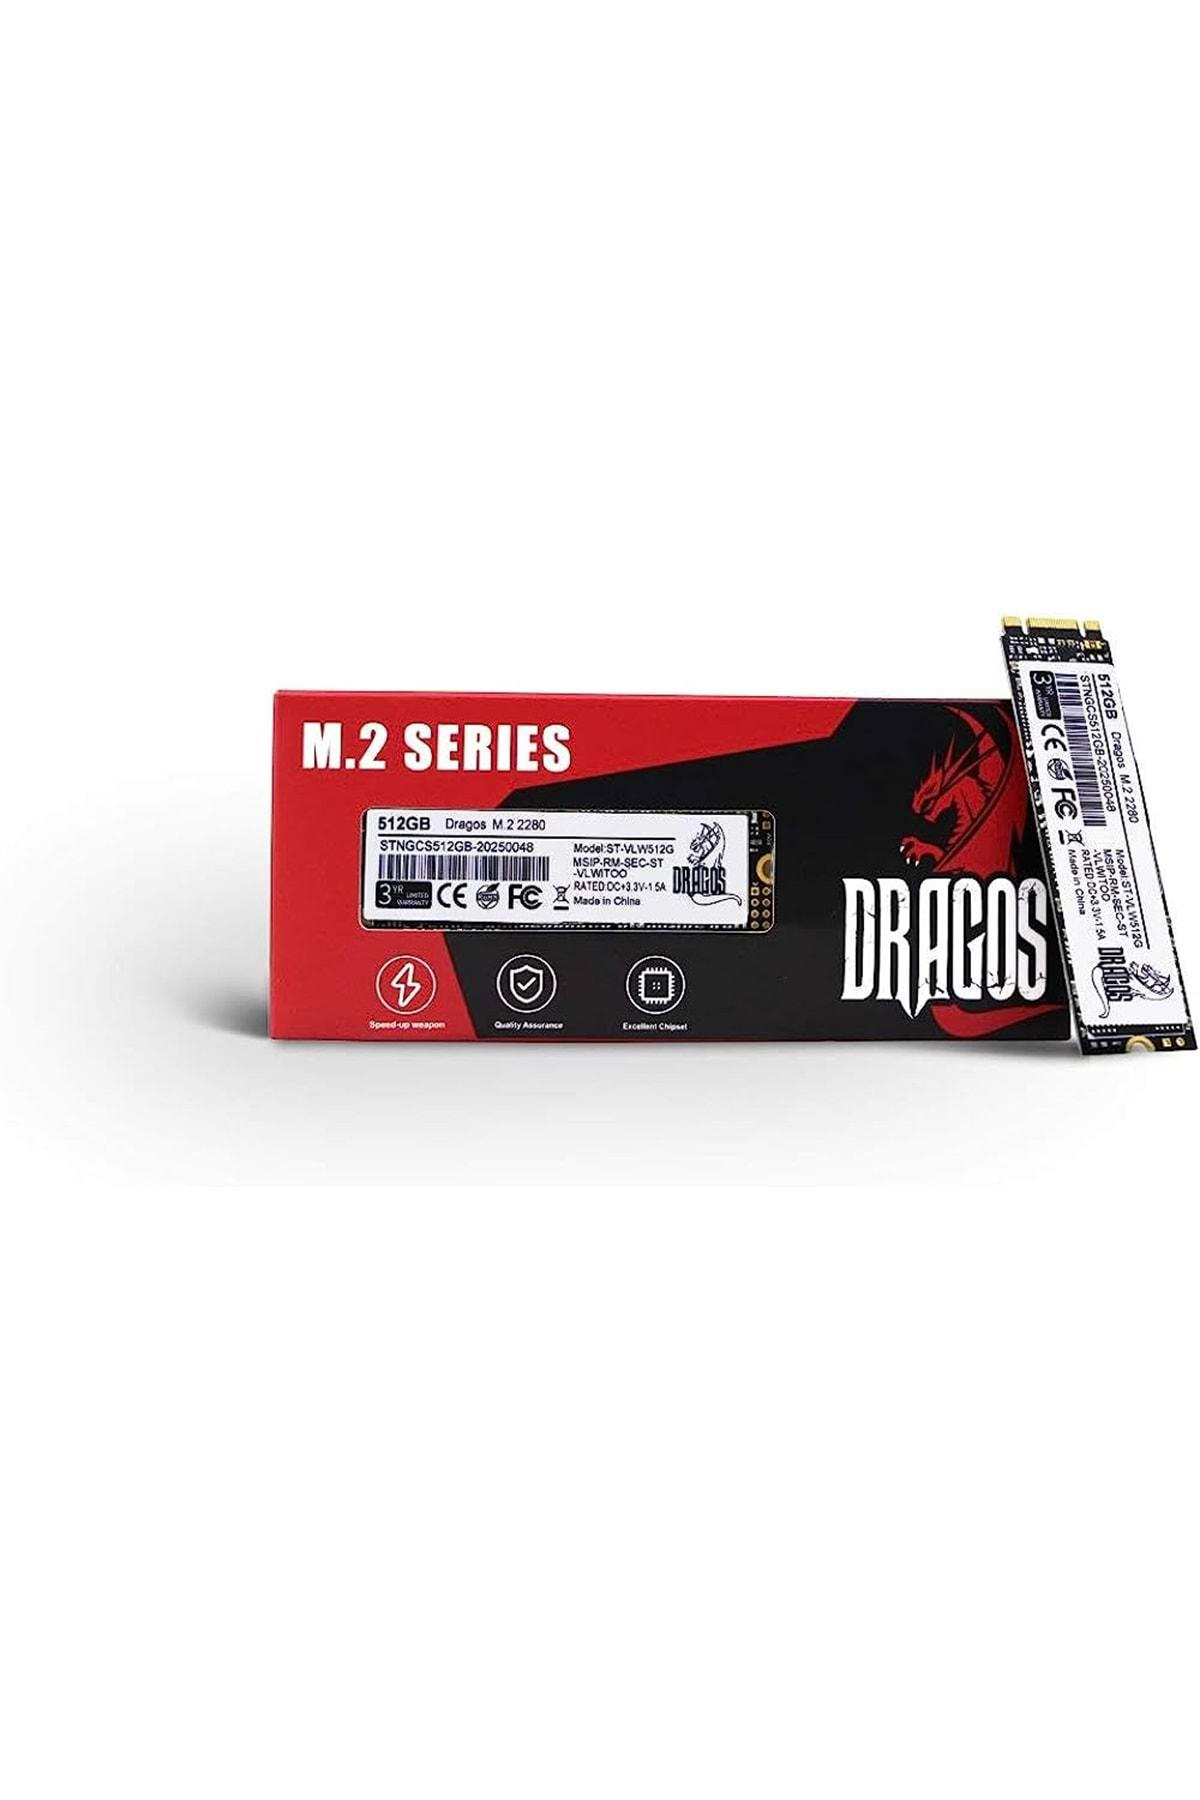 Dragos M2SSD NVME 512 GB M2 SSD